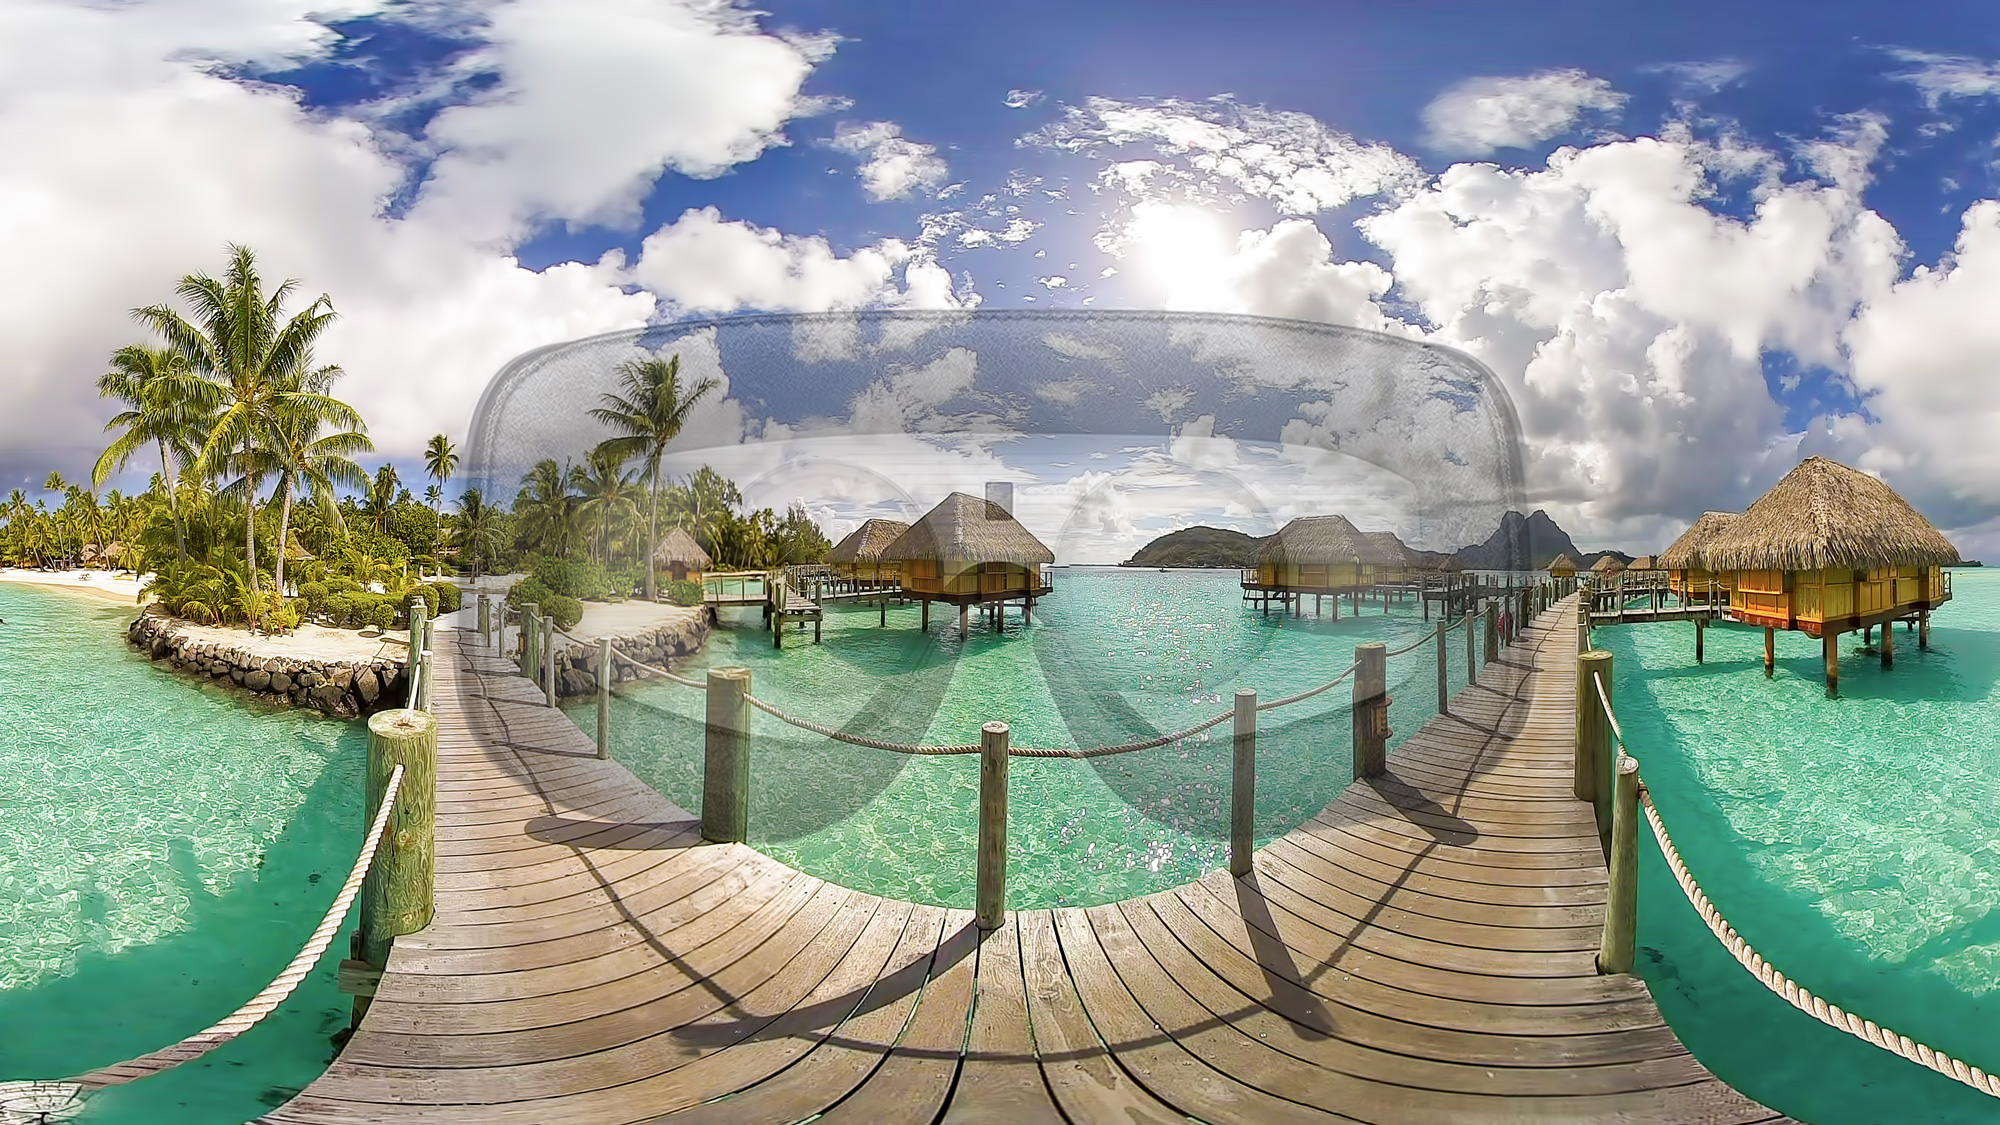 Superswell VR Homepage-Tahiti Bora Bora Overwater Bungalows_Portland Virtual Reality Company.jpg.jpg